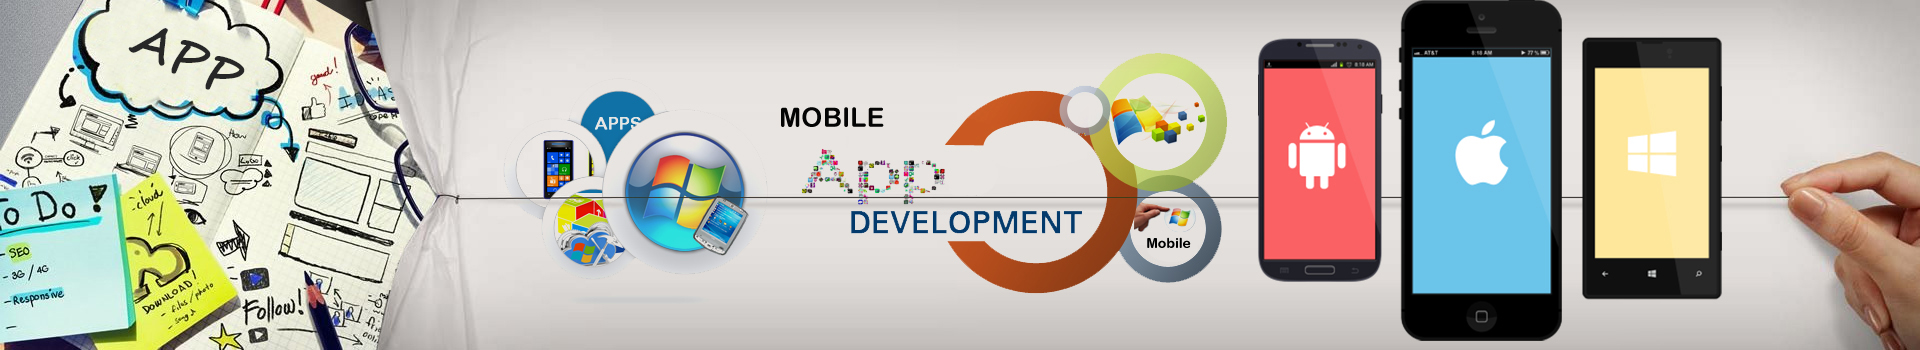 Mobile App Development Company in Chandigarh